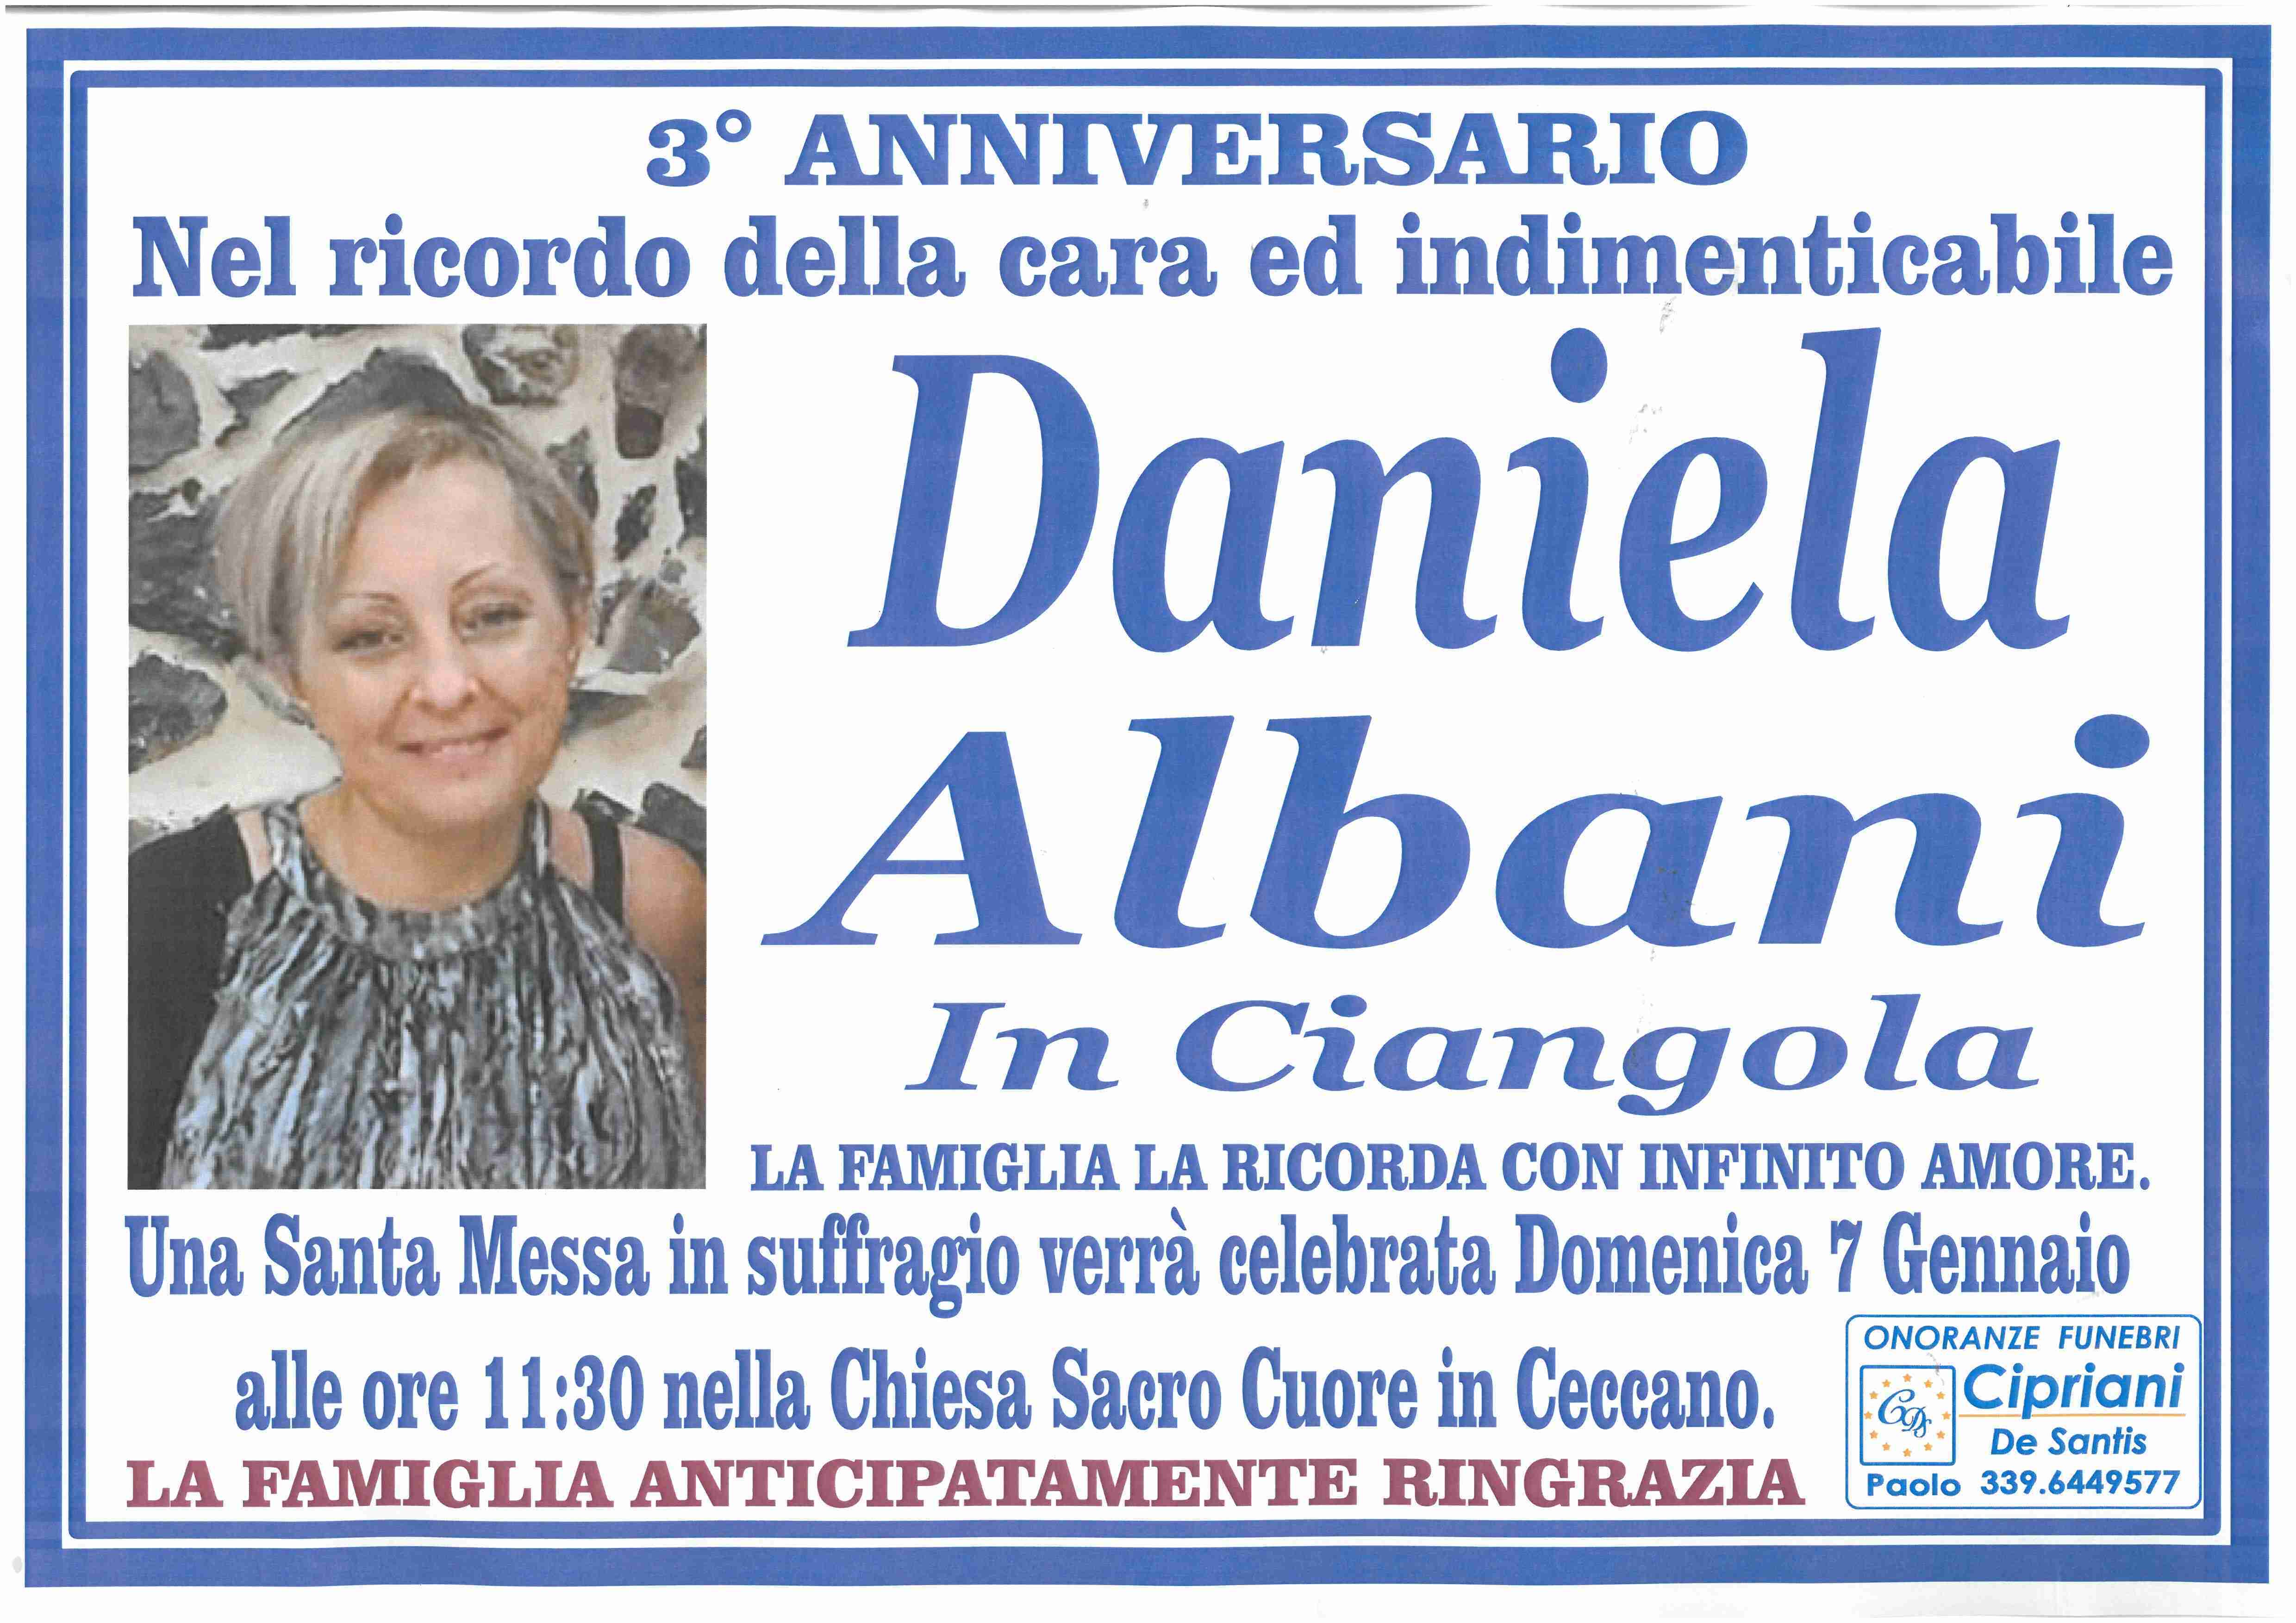 Daniela Albani